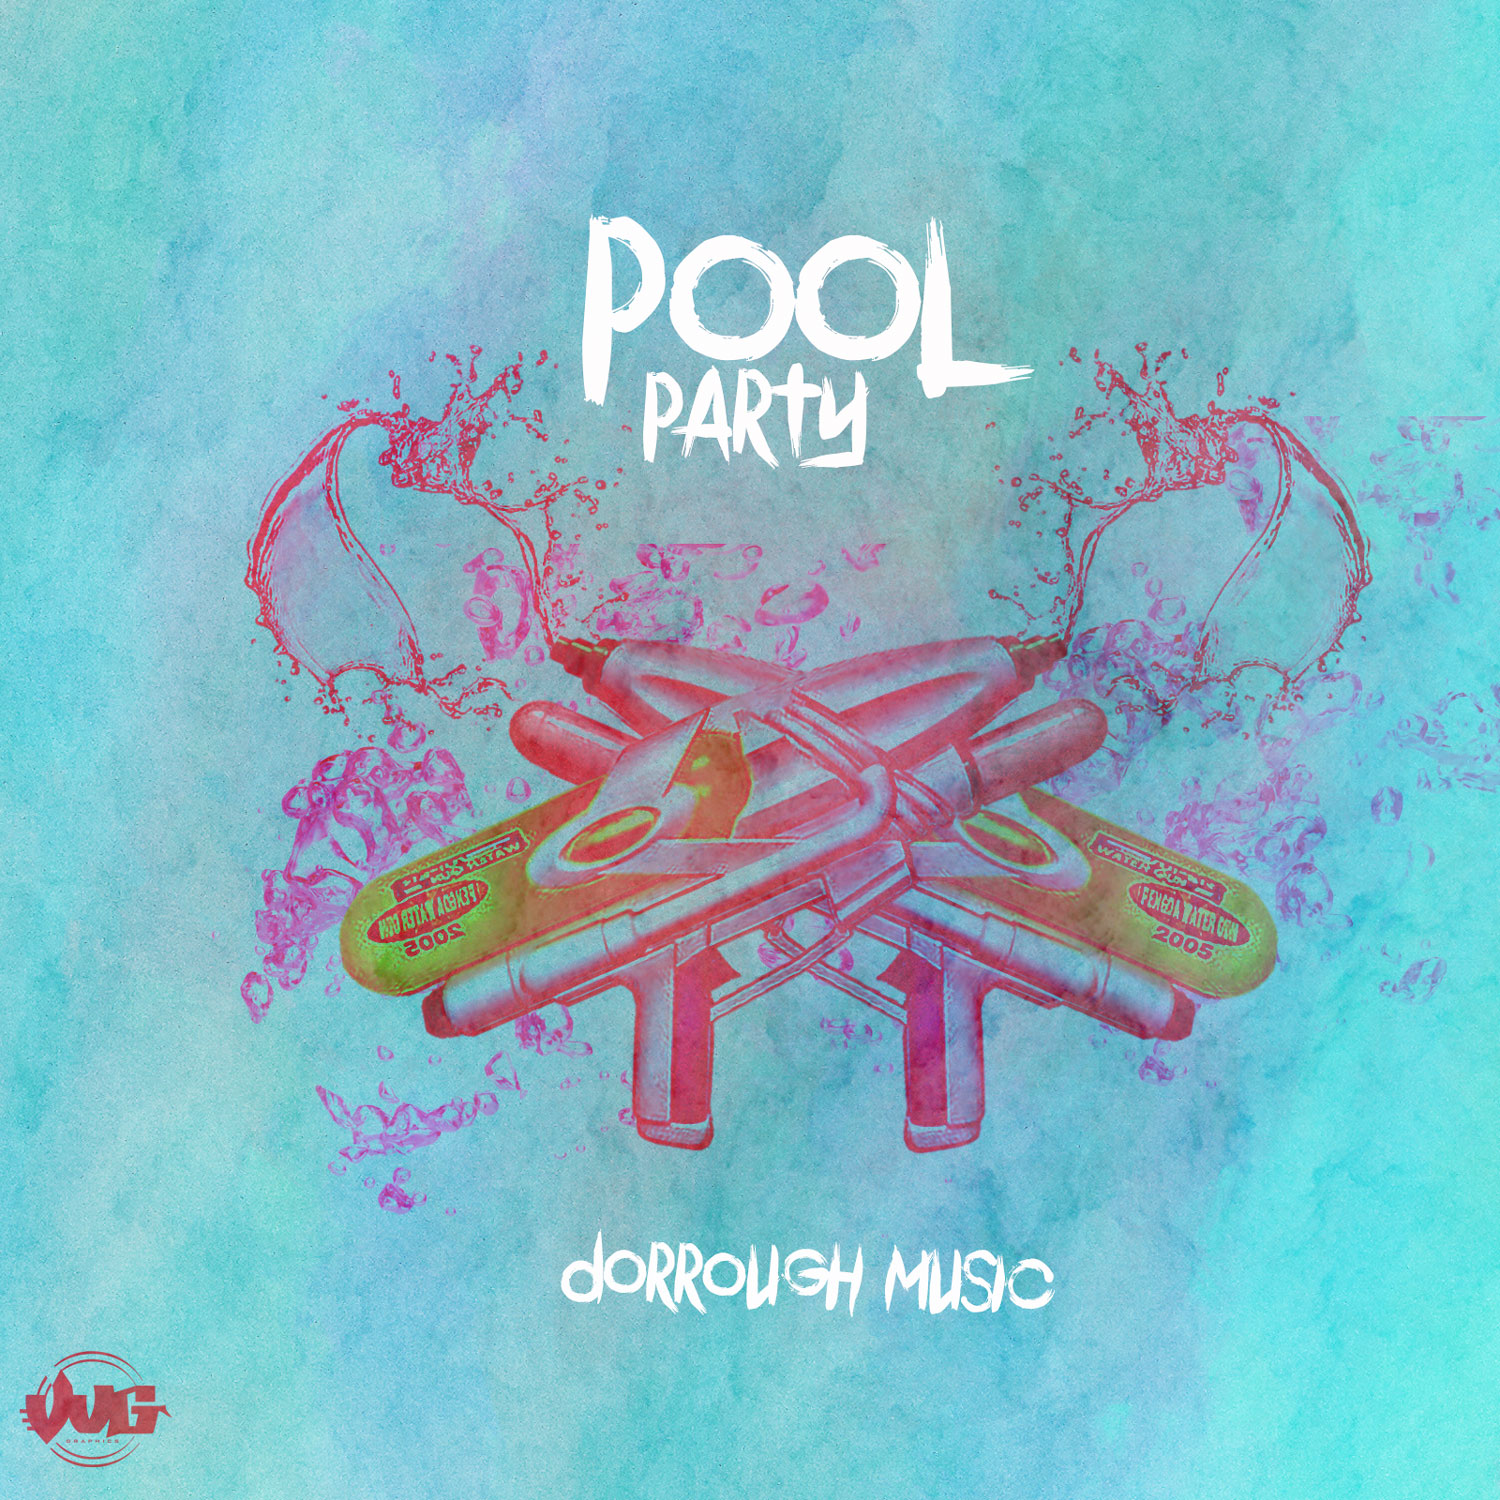 Dorrough Music – “Pool Party” (Audio)